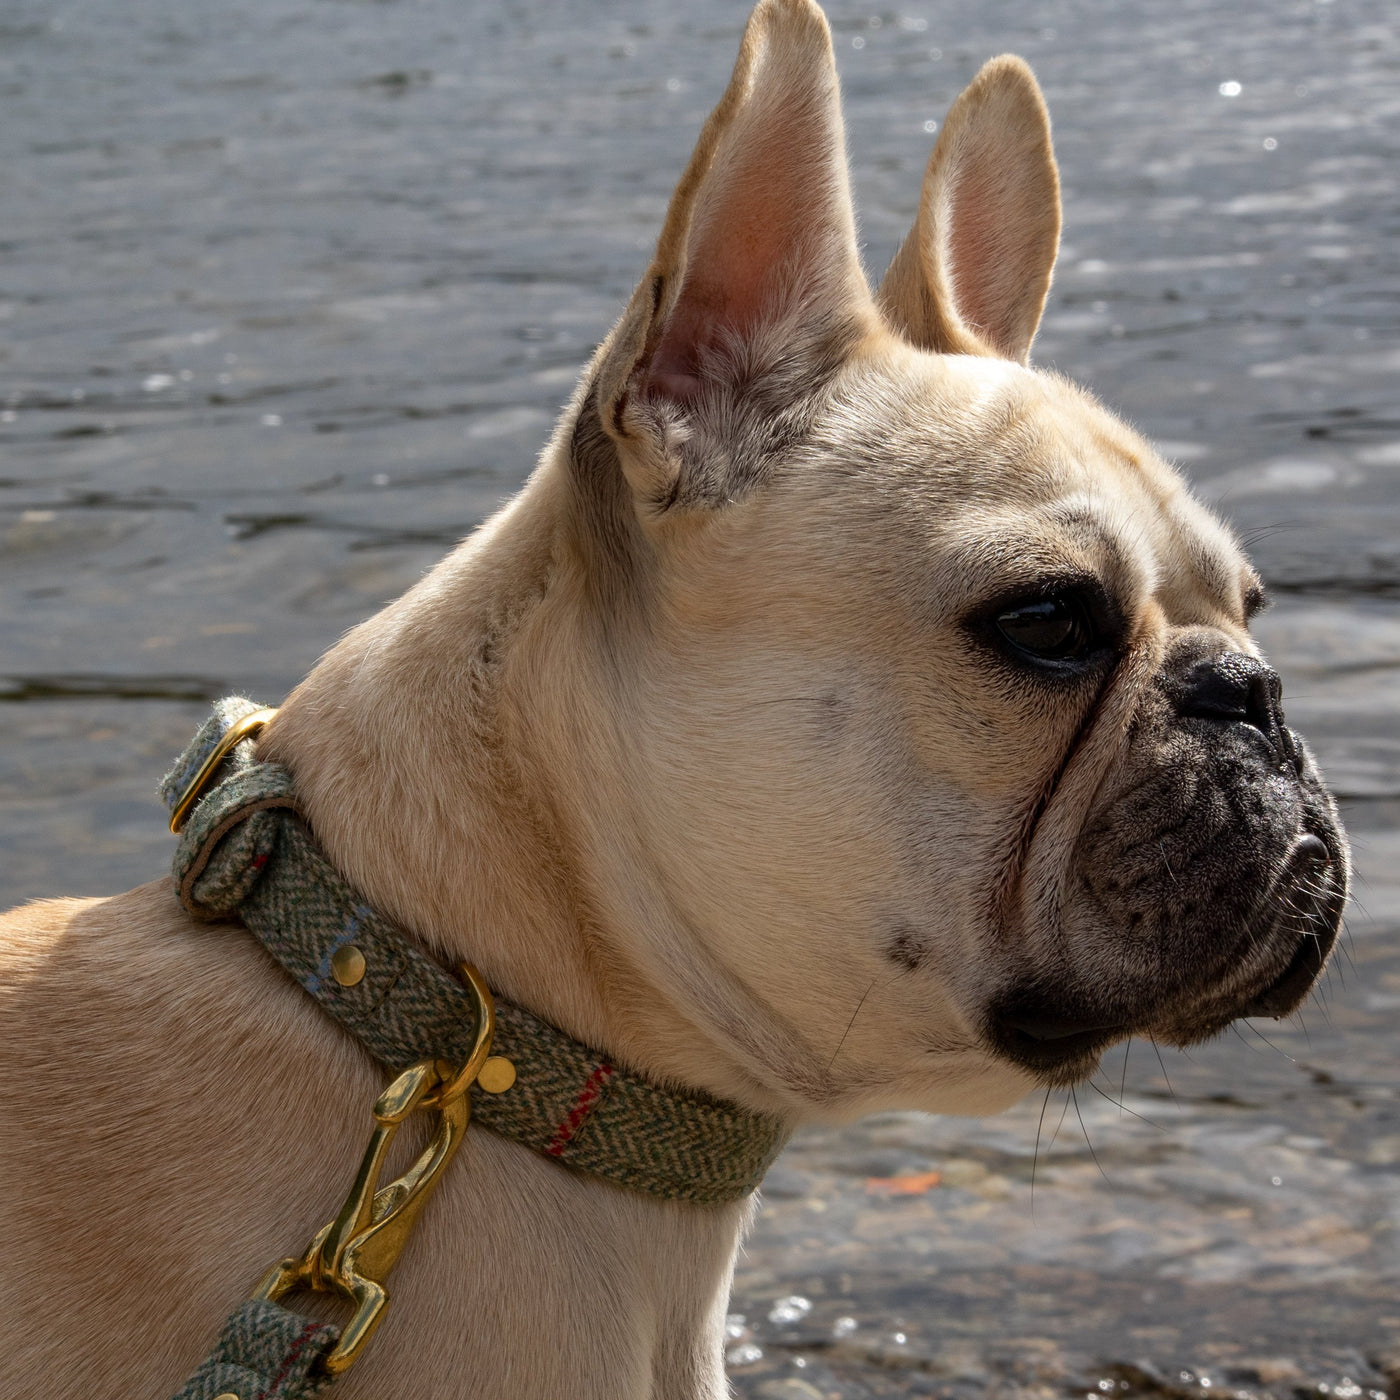 Designer Dog Collars - Does Louis Vuitton make them? – Travfurler